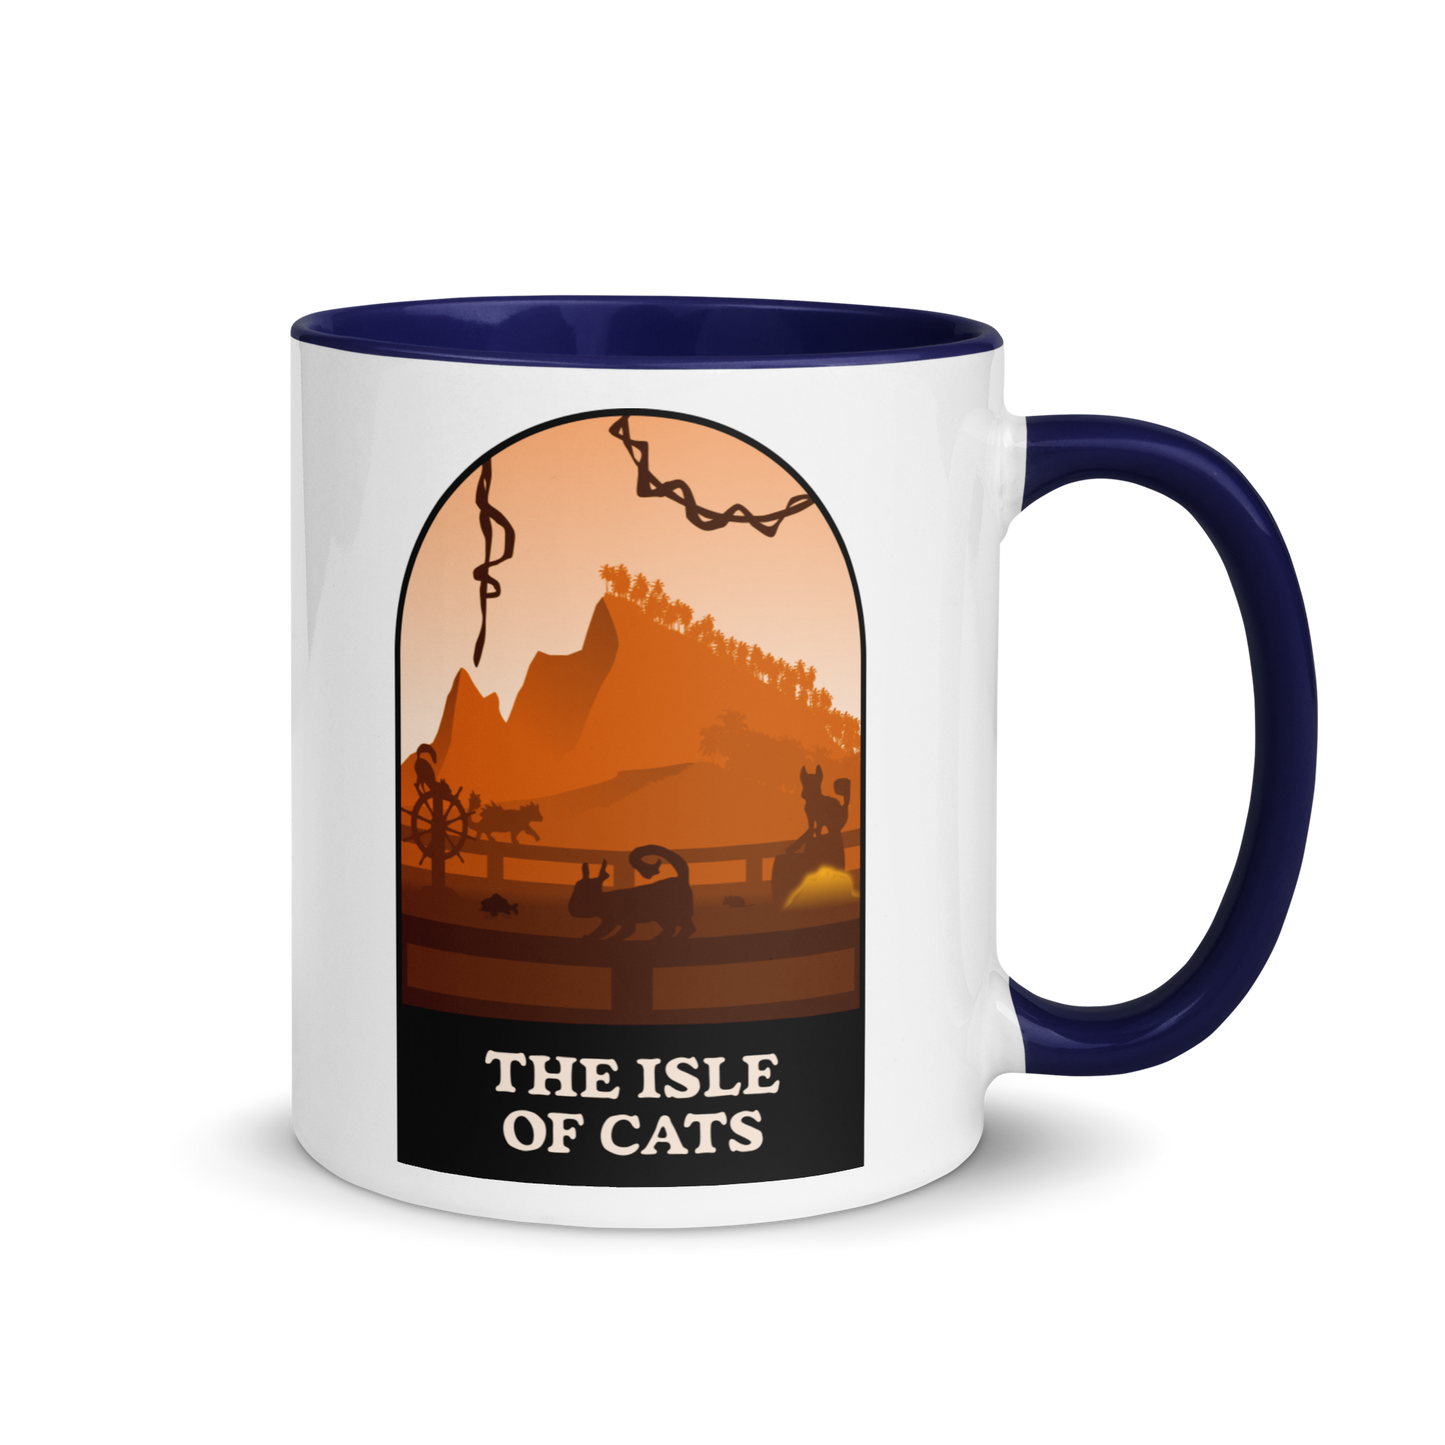 The Isle of Cats (Orange) Minimalist Board Game Mug